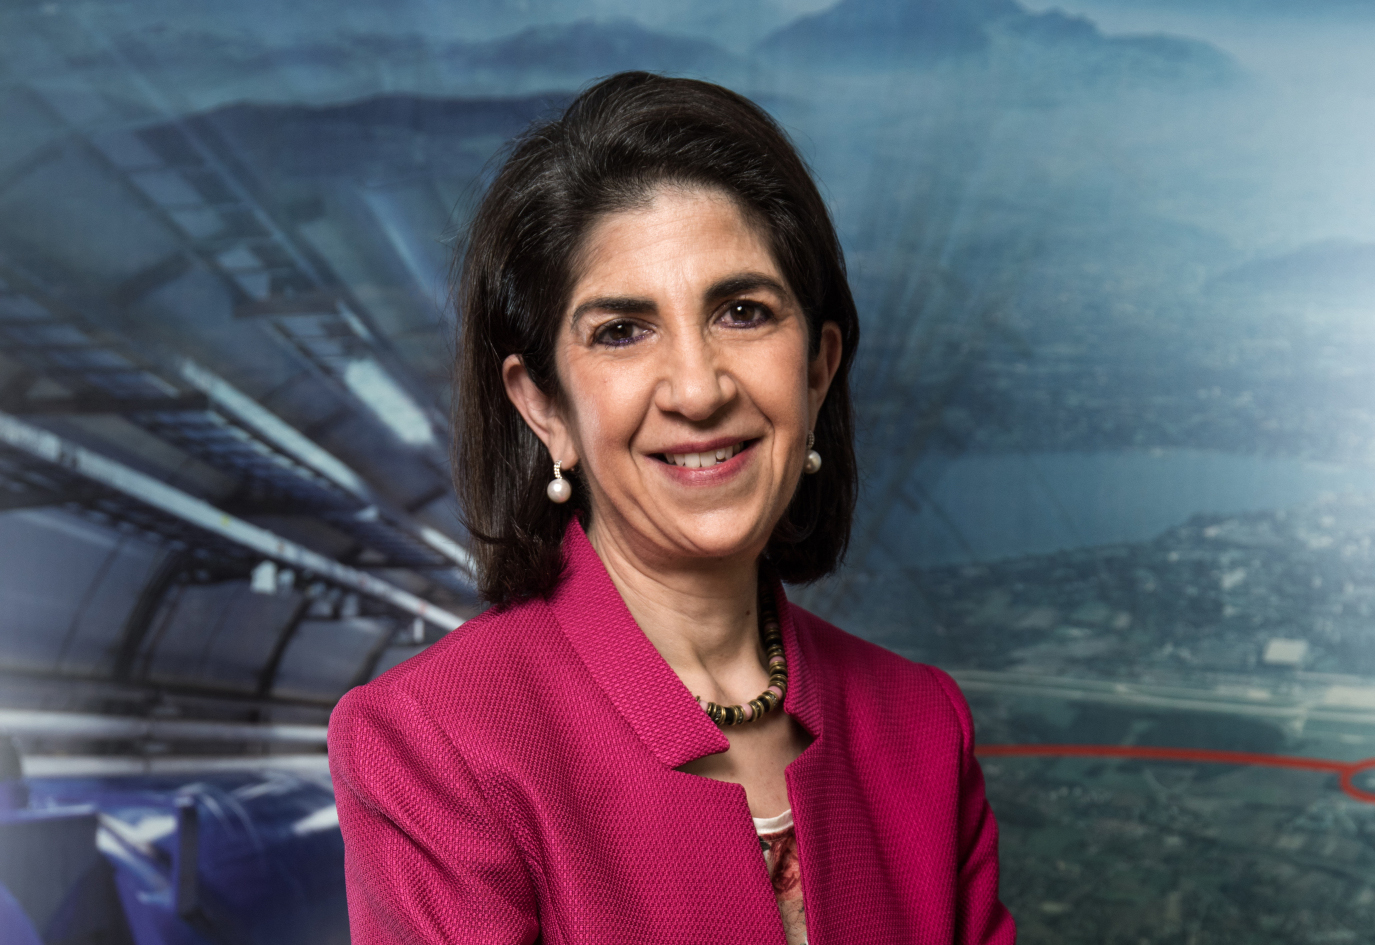 Portrait of Dr. Fabiola Gianotti, CERN’s Director-General